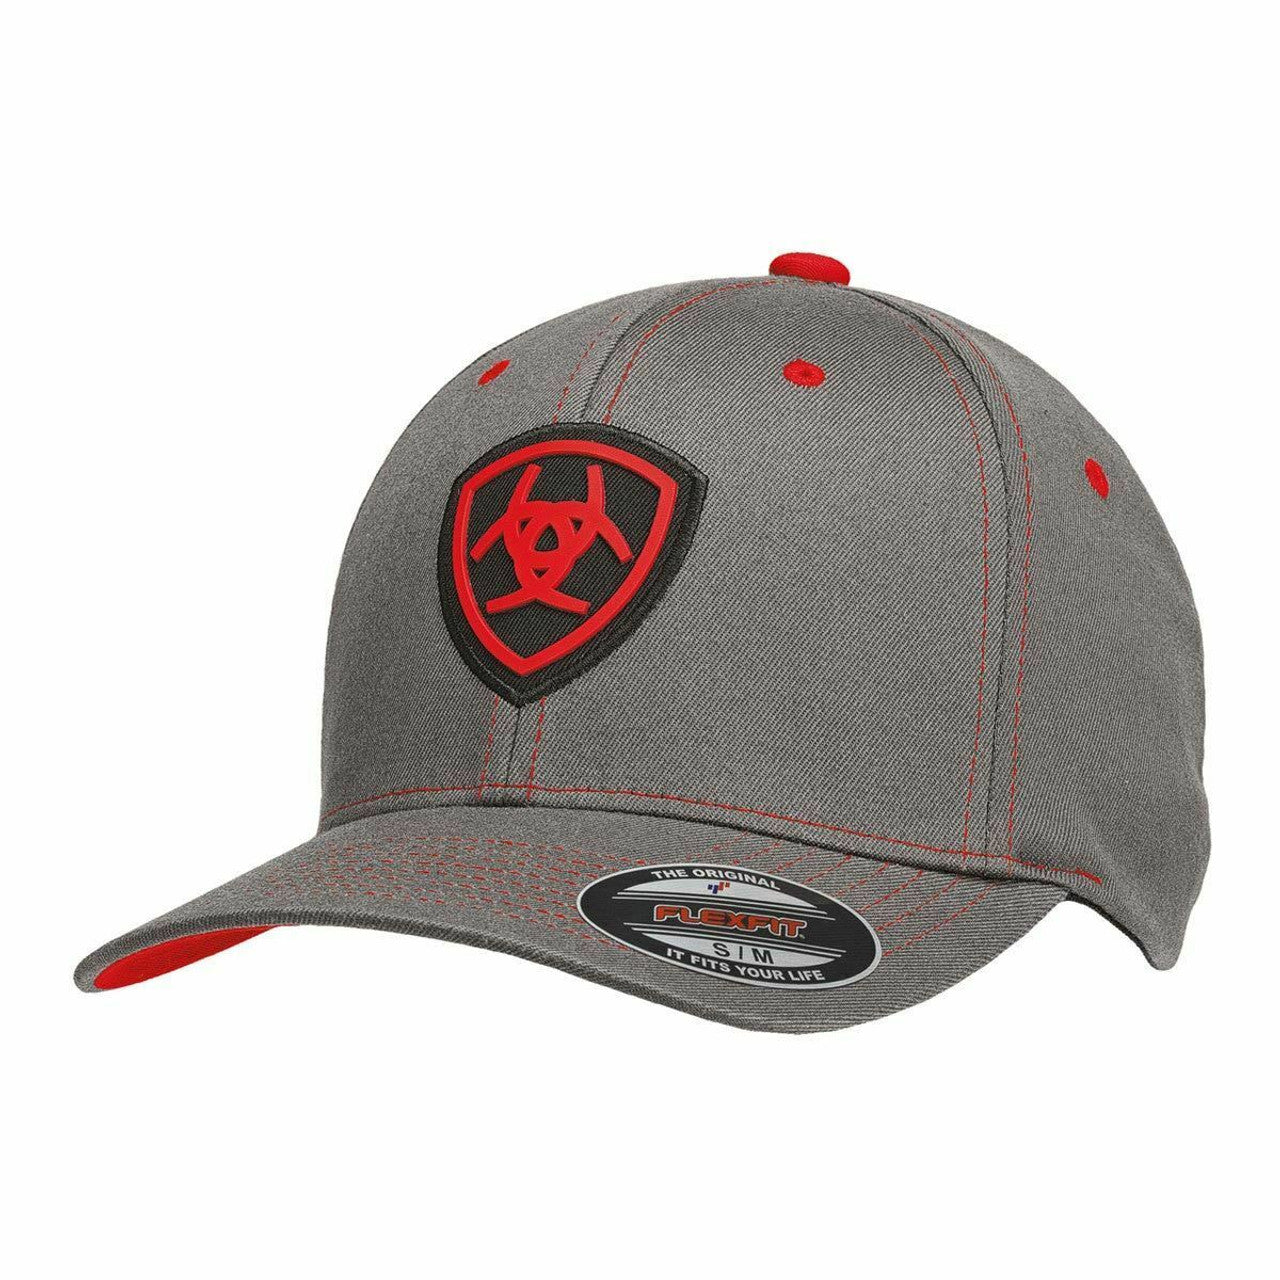 Ariat Men's Gray Spandex Flex Fit Baseball Cap Patch Hats